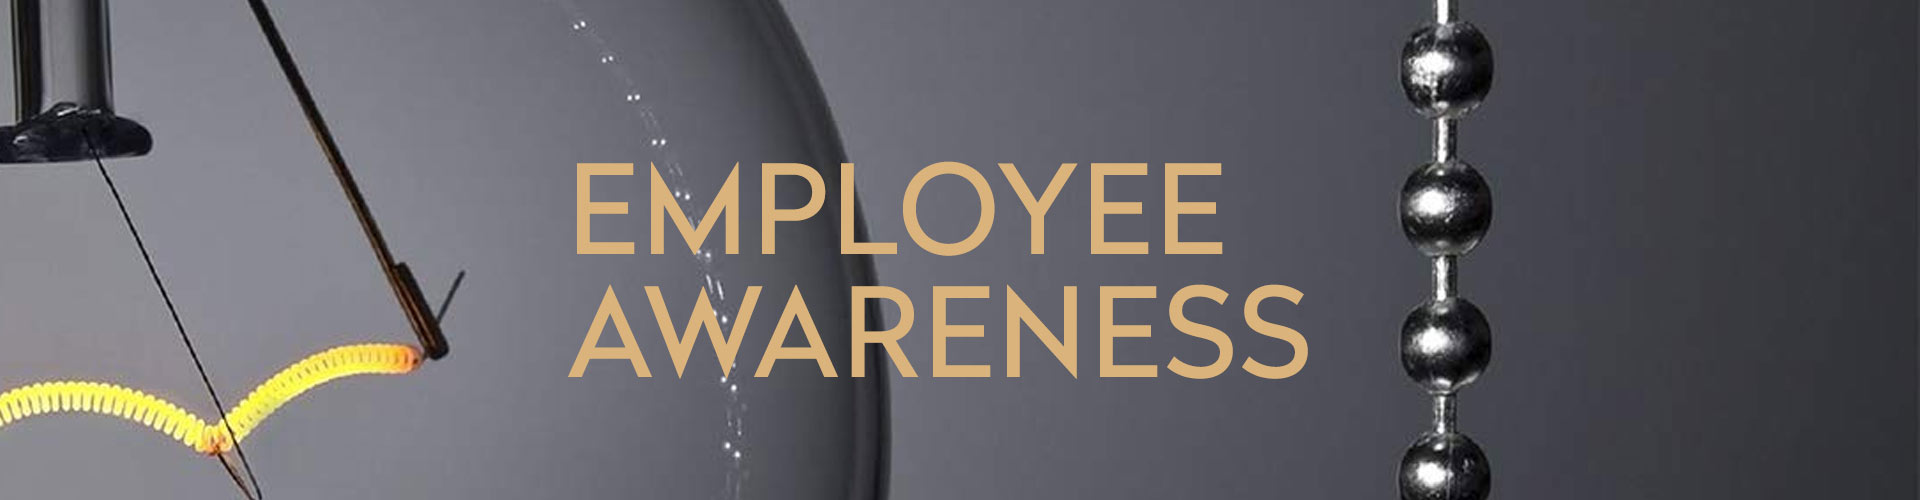 Employee Awareness